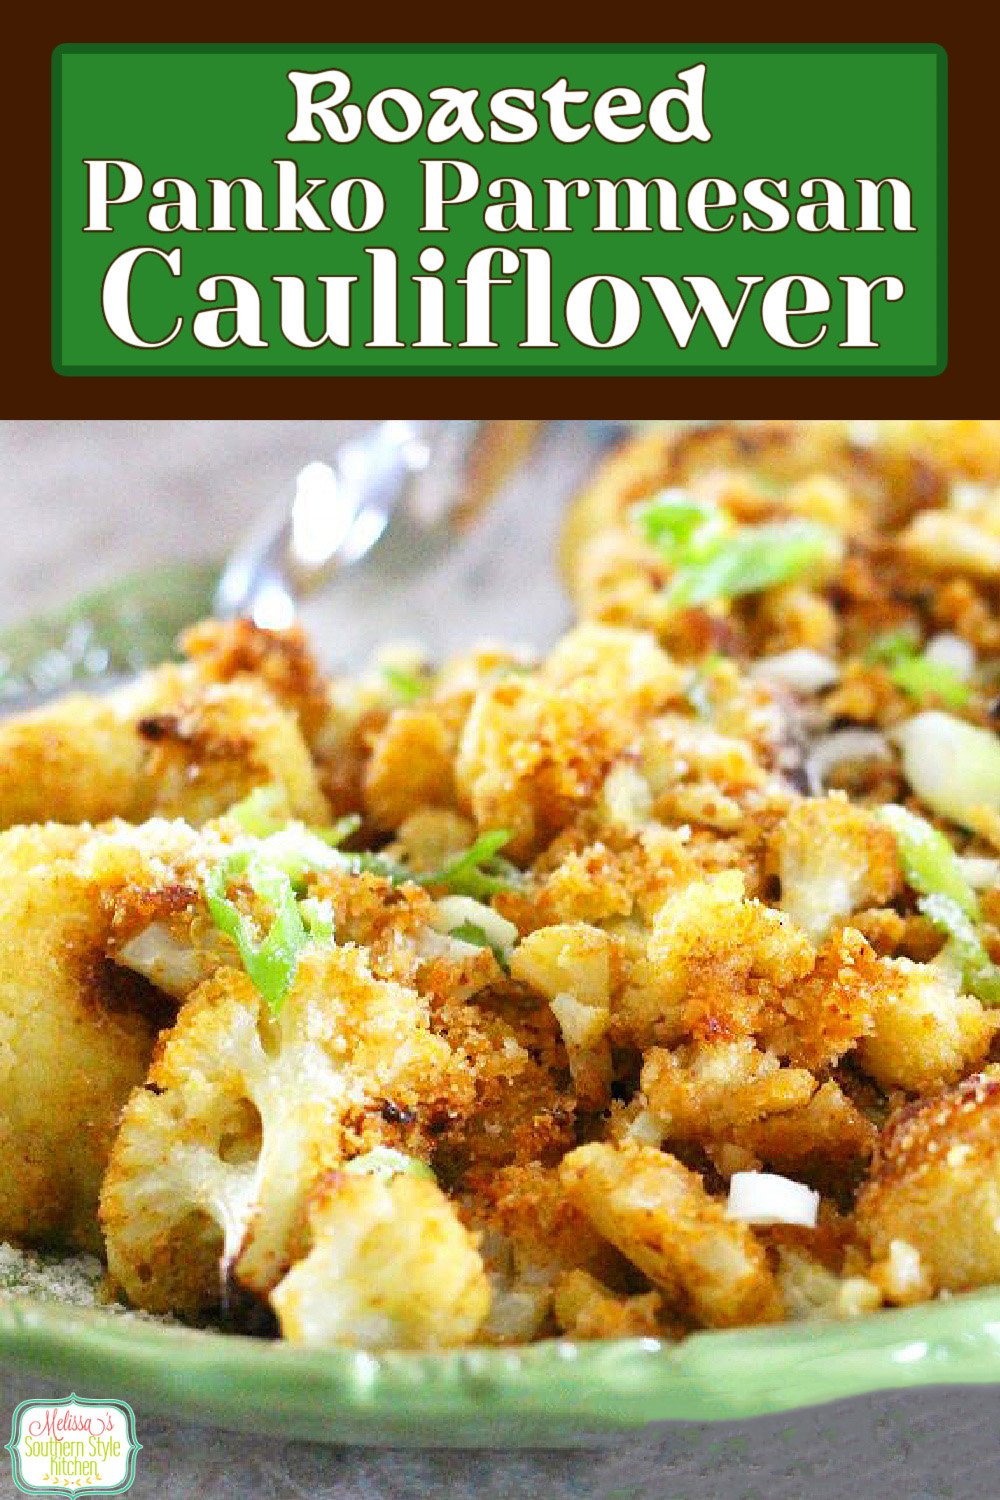 Amp up your side dish menu with this Oven Roasted Panko-Parmesan Cauliflower! #cauliflower #roastedcauliflower #pankoparmesancauliflower #ovencauliflower #cauliflowerrecipes via @melissasssk